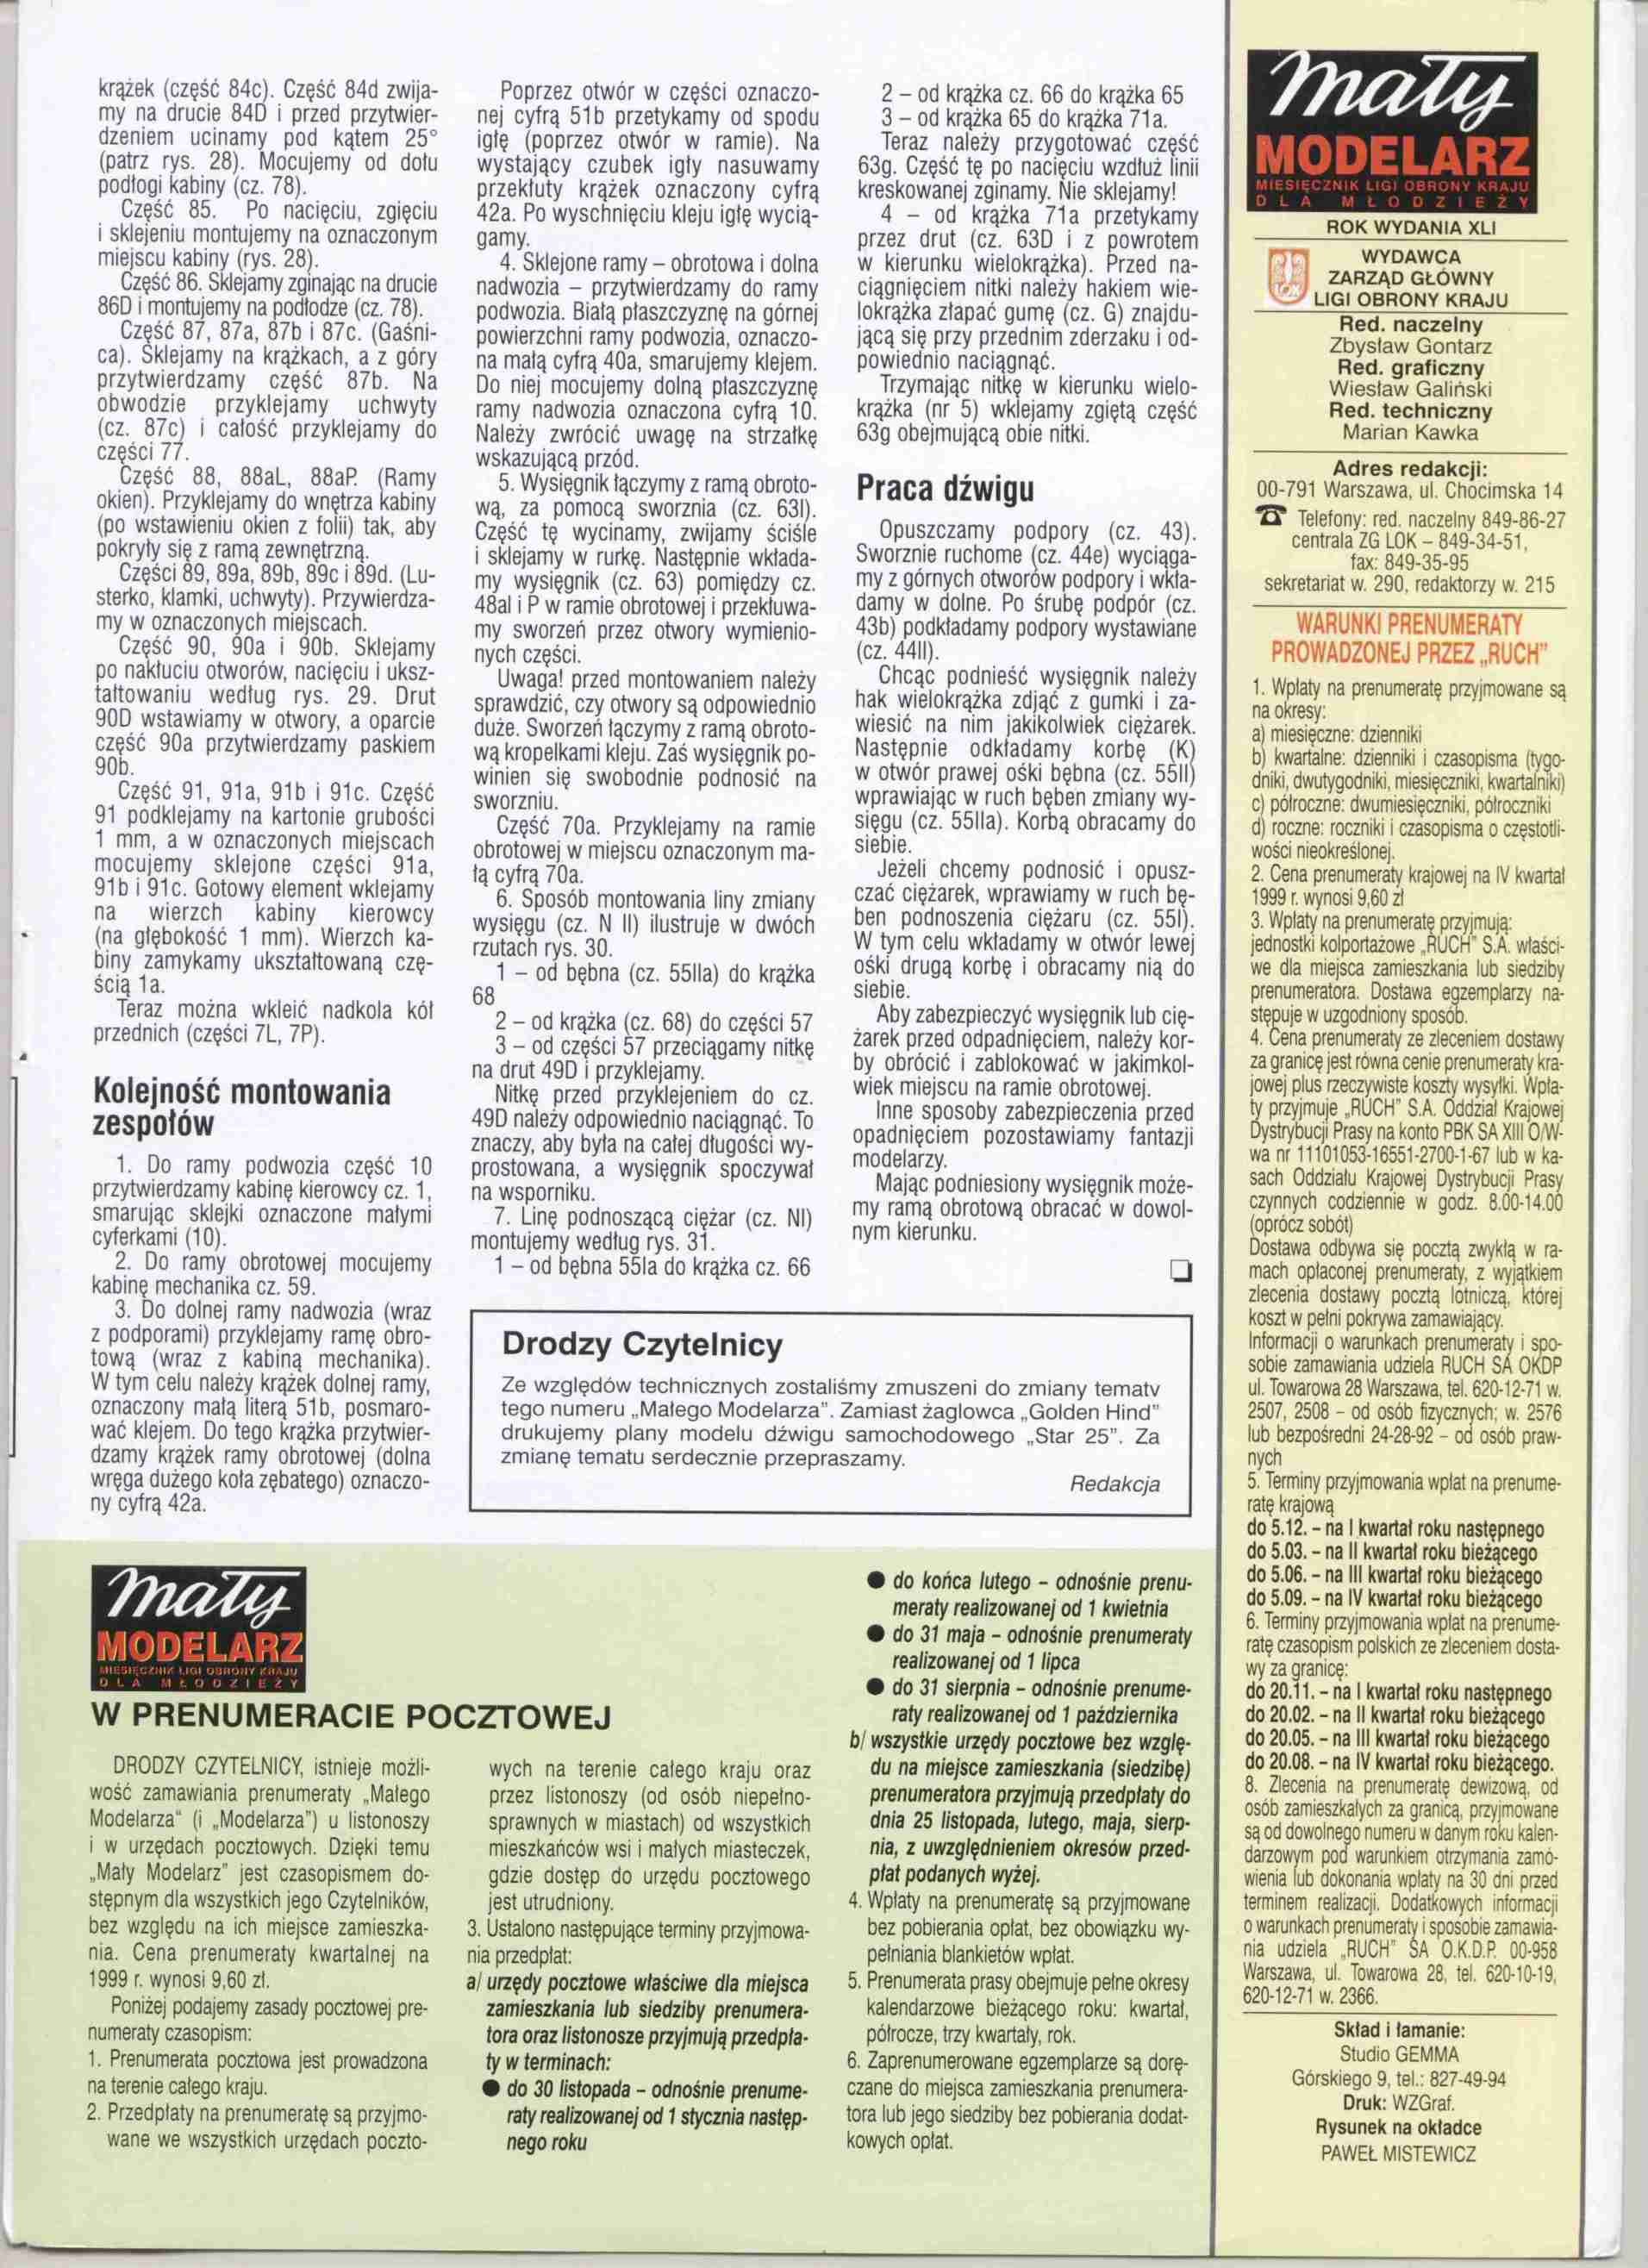 "Maly Modelarz" 7-8, 1999, 11 с.